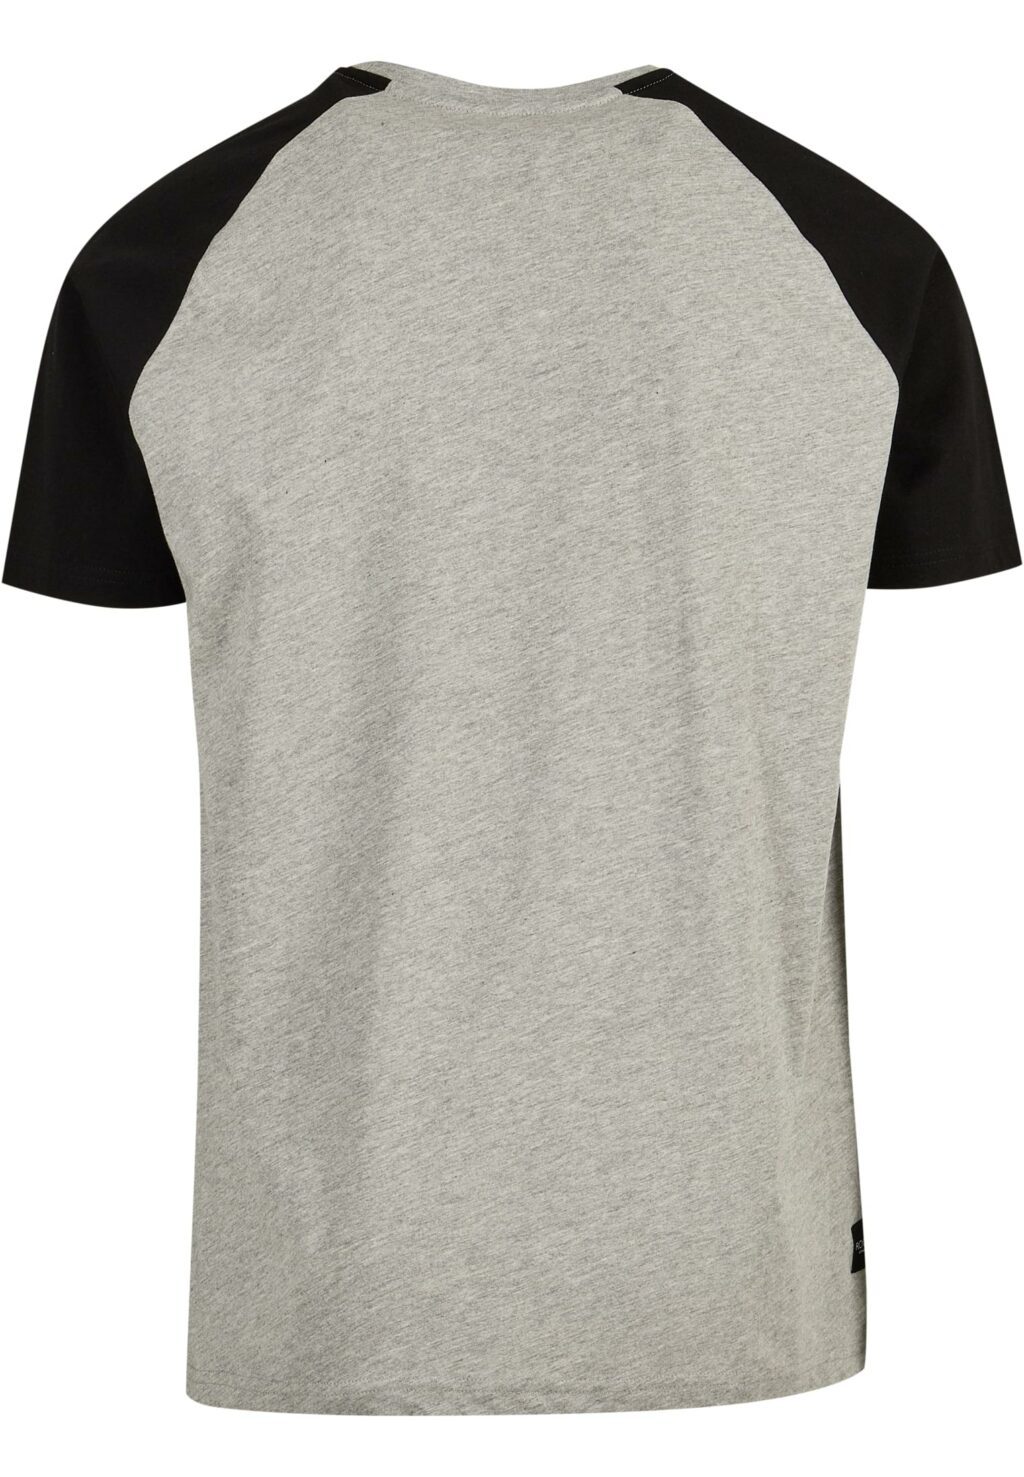 Rocawear T-Shirt grey melange/black RWTS050